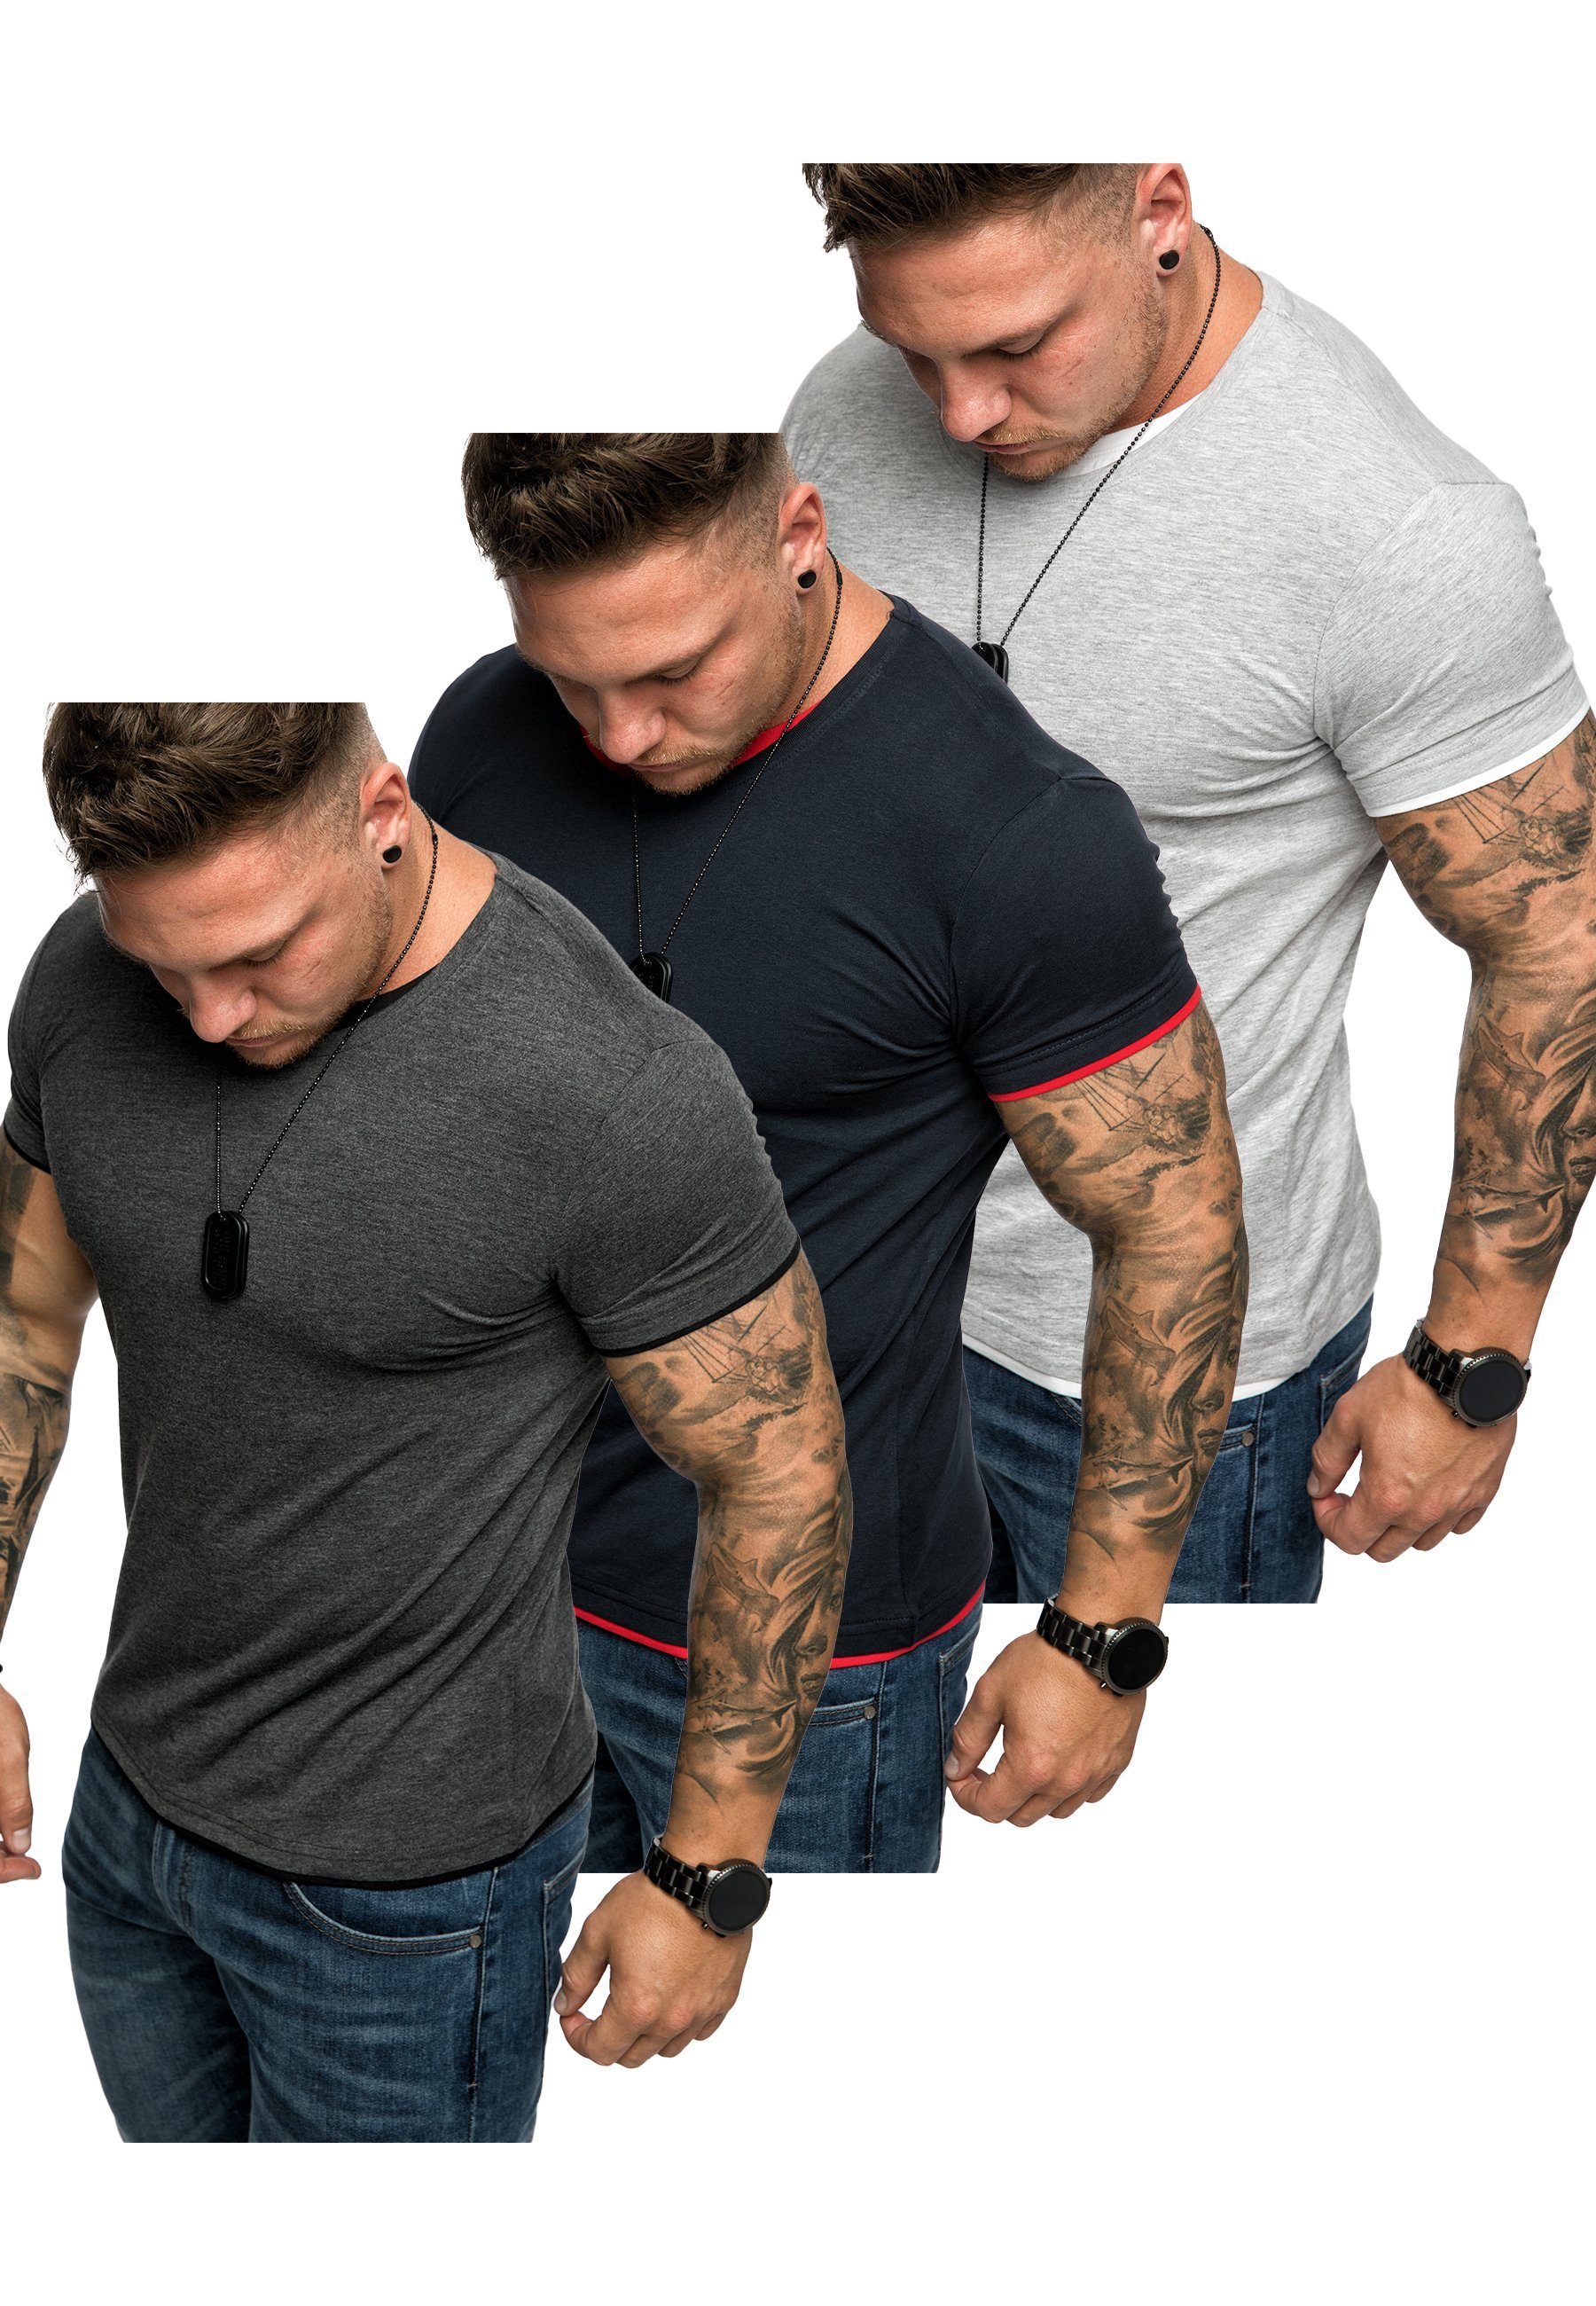 Navyblau/Rot 3. Grau/Weiß) Amaci&Sons Rundhalsausschnitt T-Shirts Herren Oversize LAKEWOOD T-Shirt + Basic (3er-Pack) mit (Anthrazit/Schwarz T-Shirt 3er-Pack +